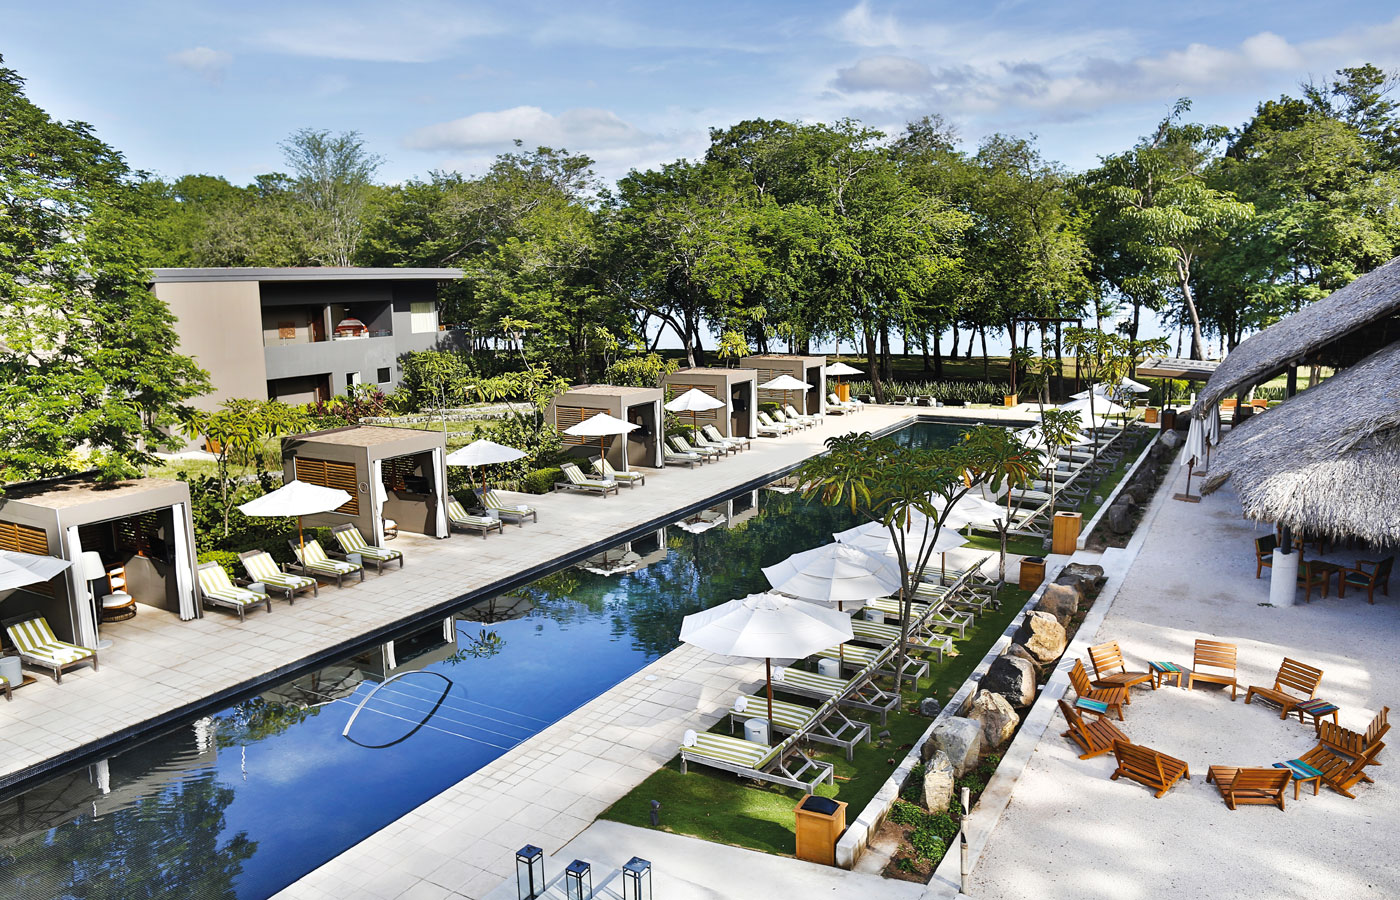 El Mangroove Papagayo - Luxury Costa Rica hotel, luxury Costa Rica, luxury holidays to Costa Rica, tailor-made holidays to Costa Rica